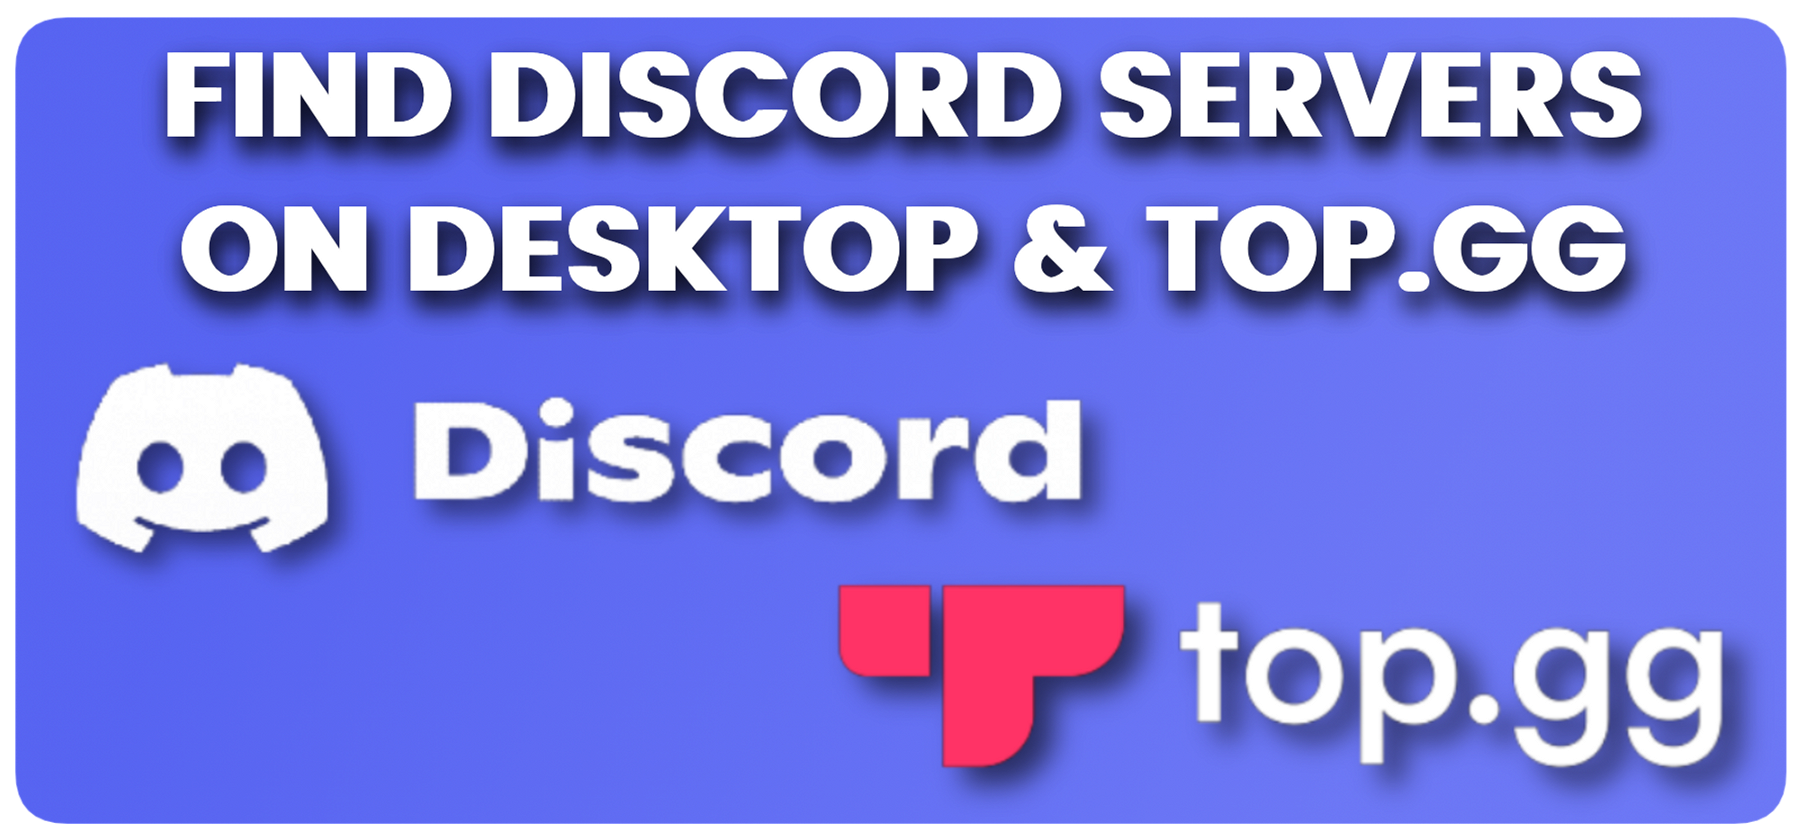 DISBOARD  Public Discord Server List